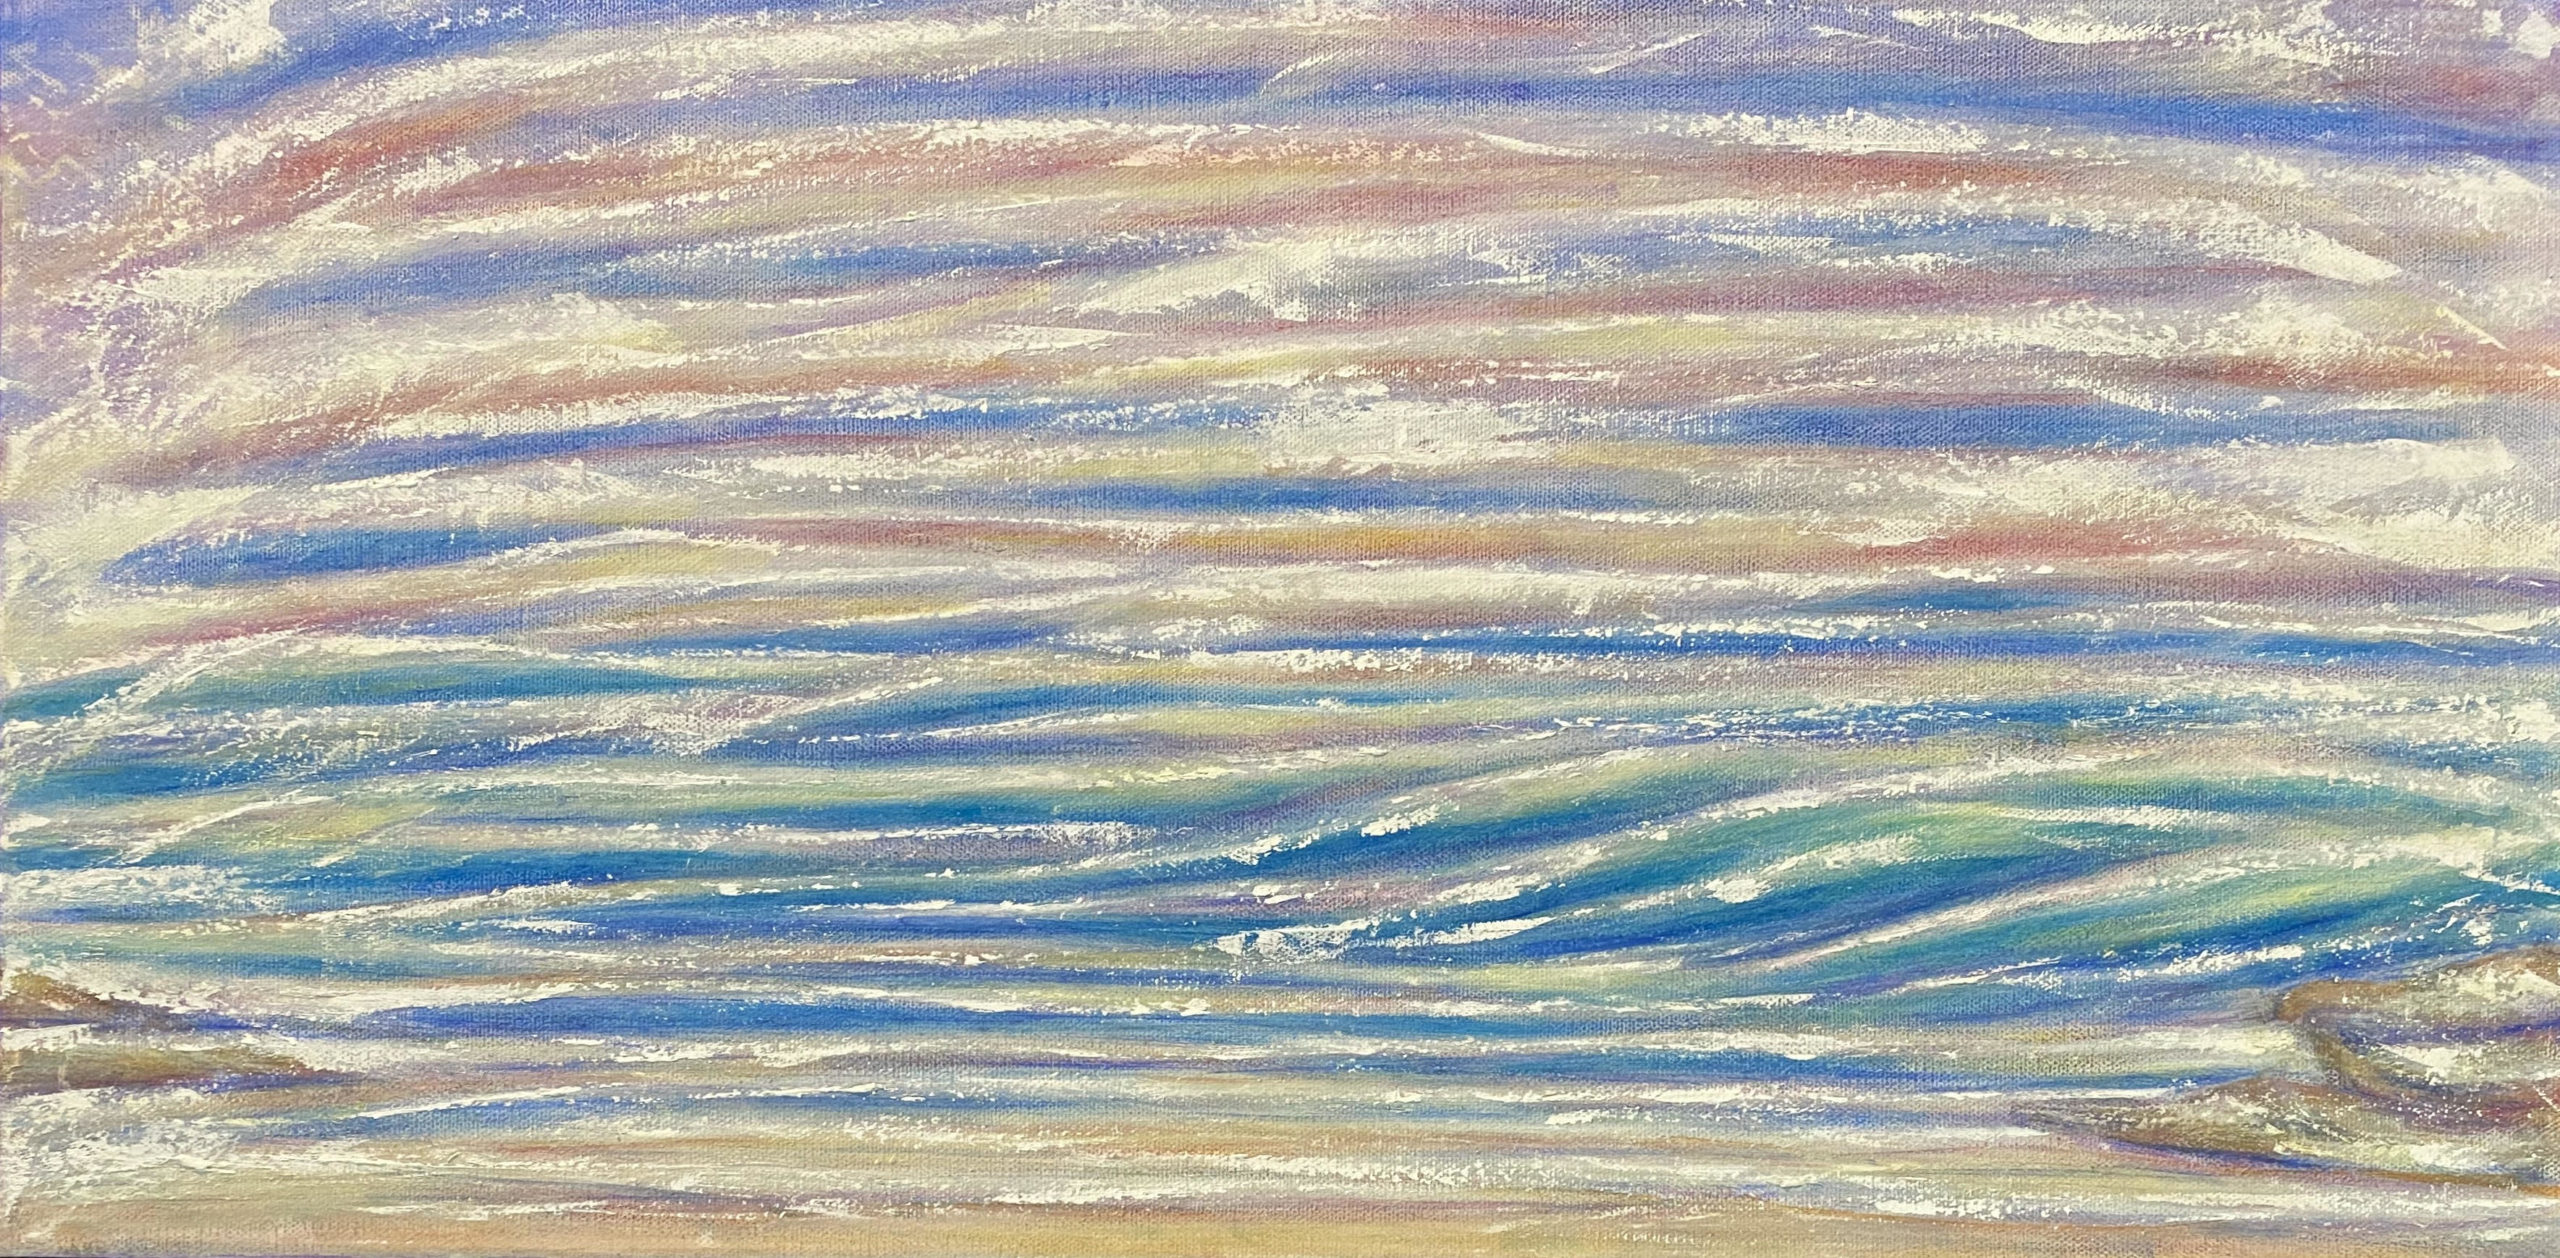 'Hockney Waves' - study in flowing perspective